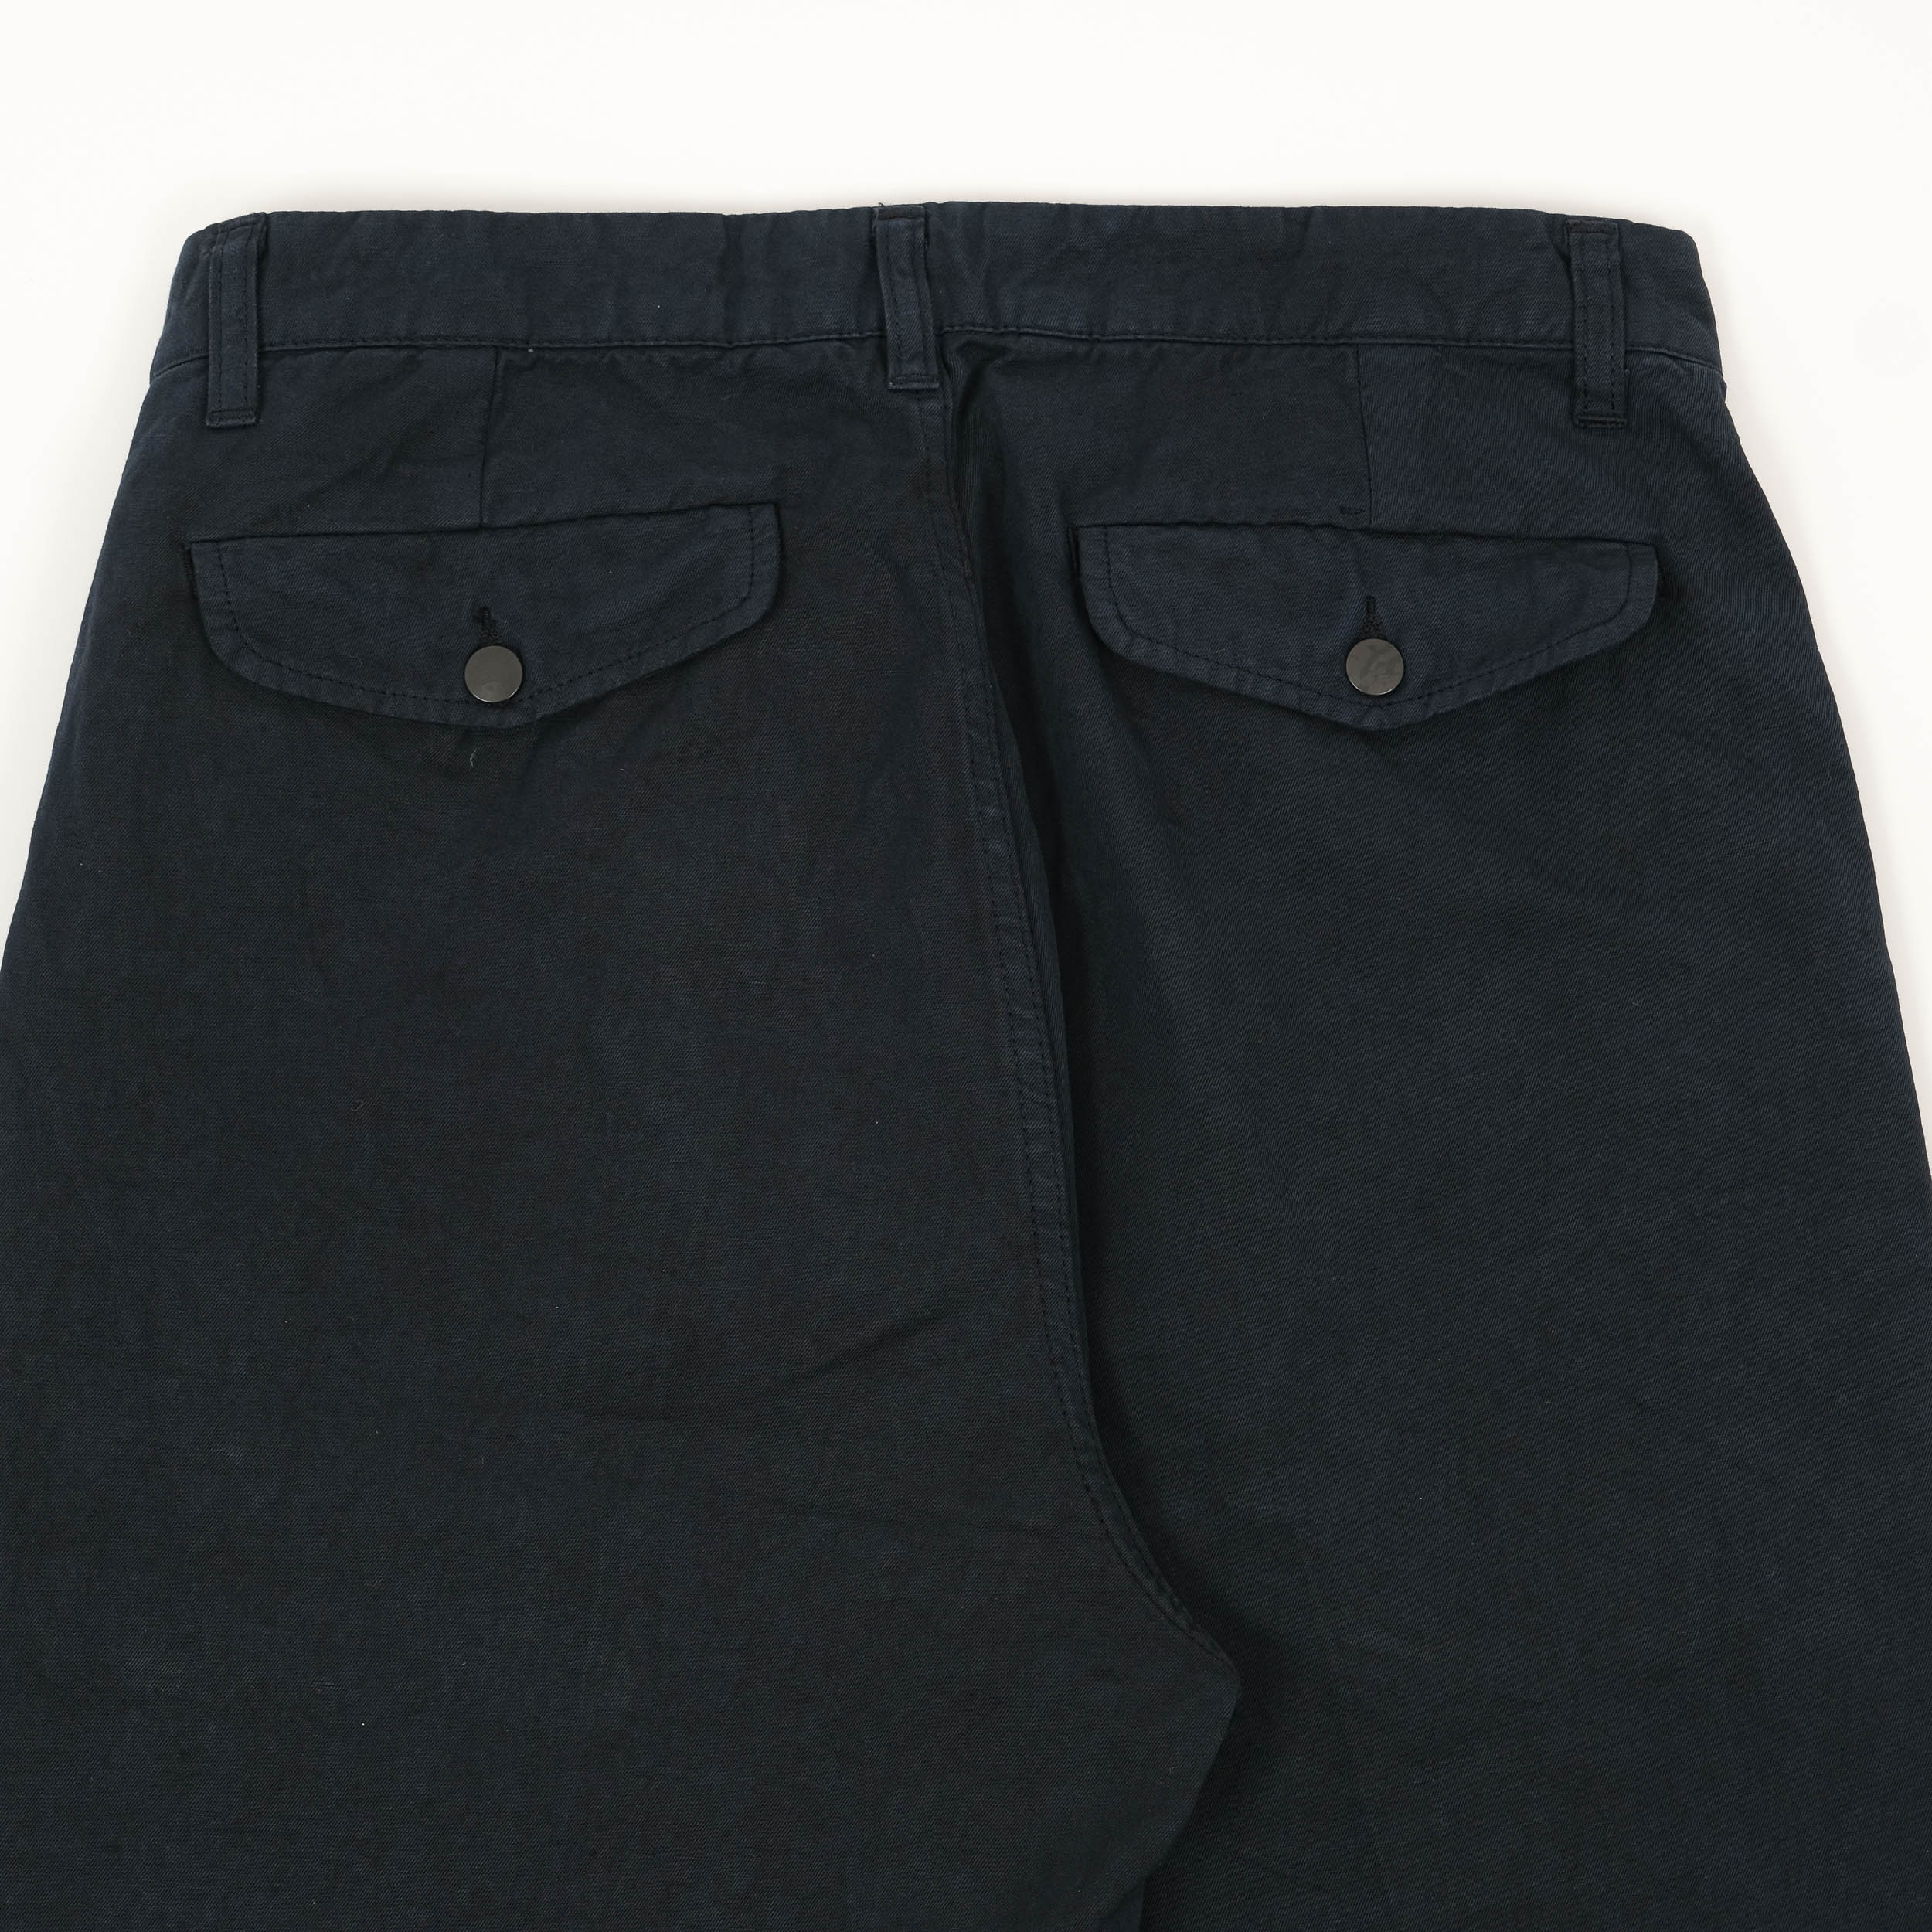 PABLO High Waist Pants | BRUT Vintage Shop | Worldwide shipping ...